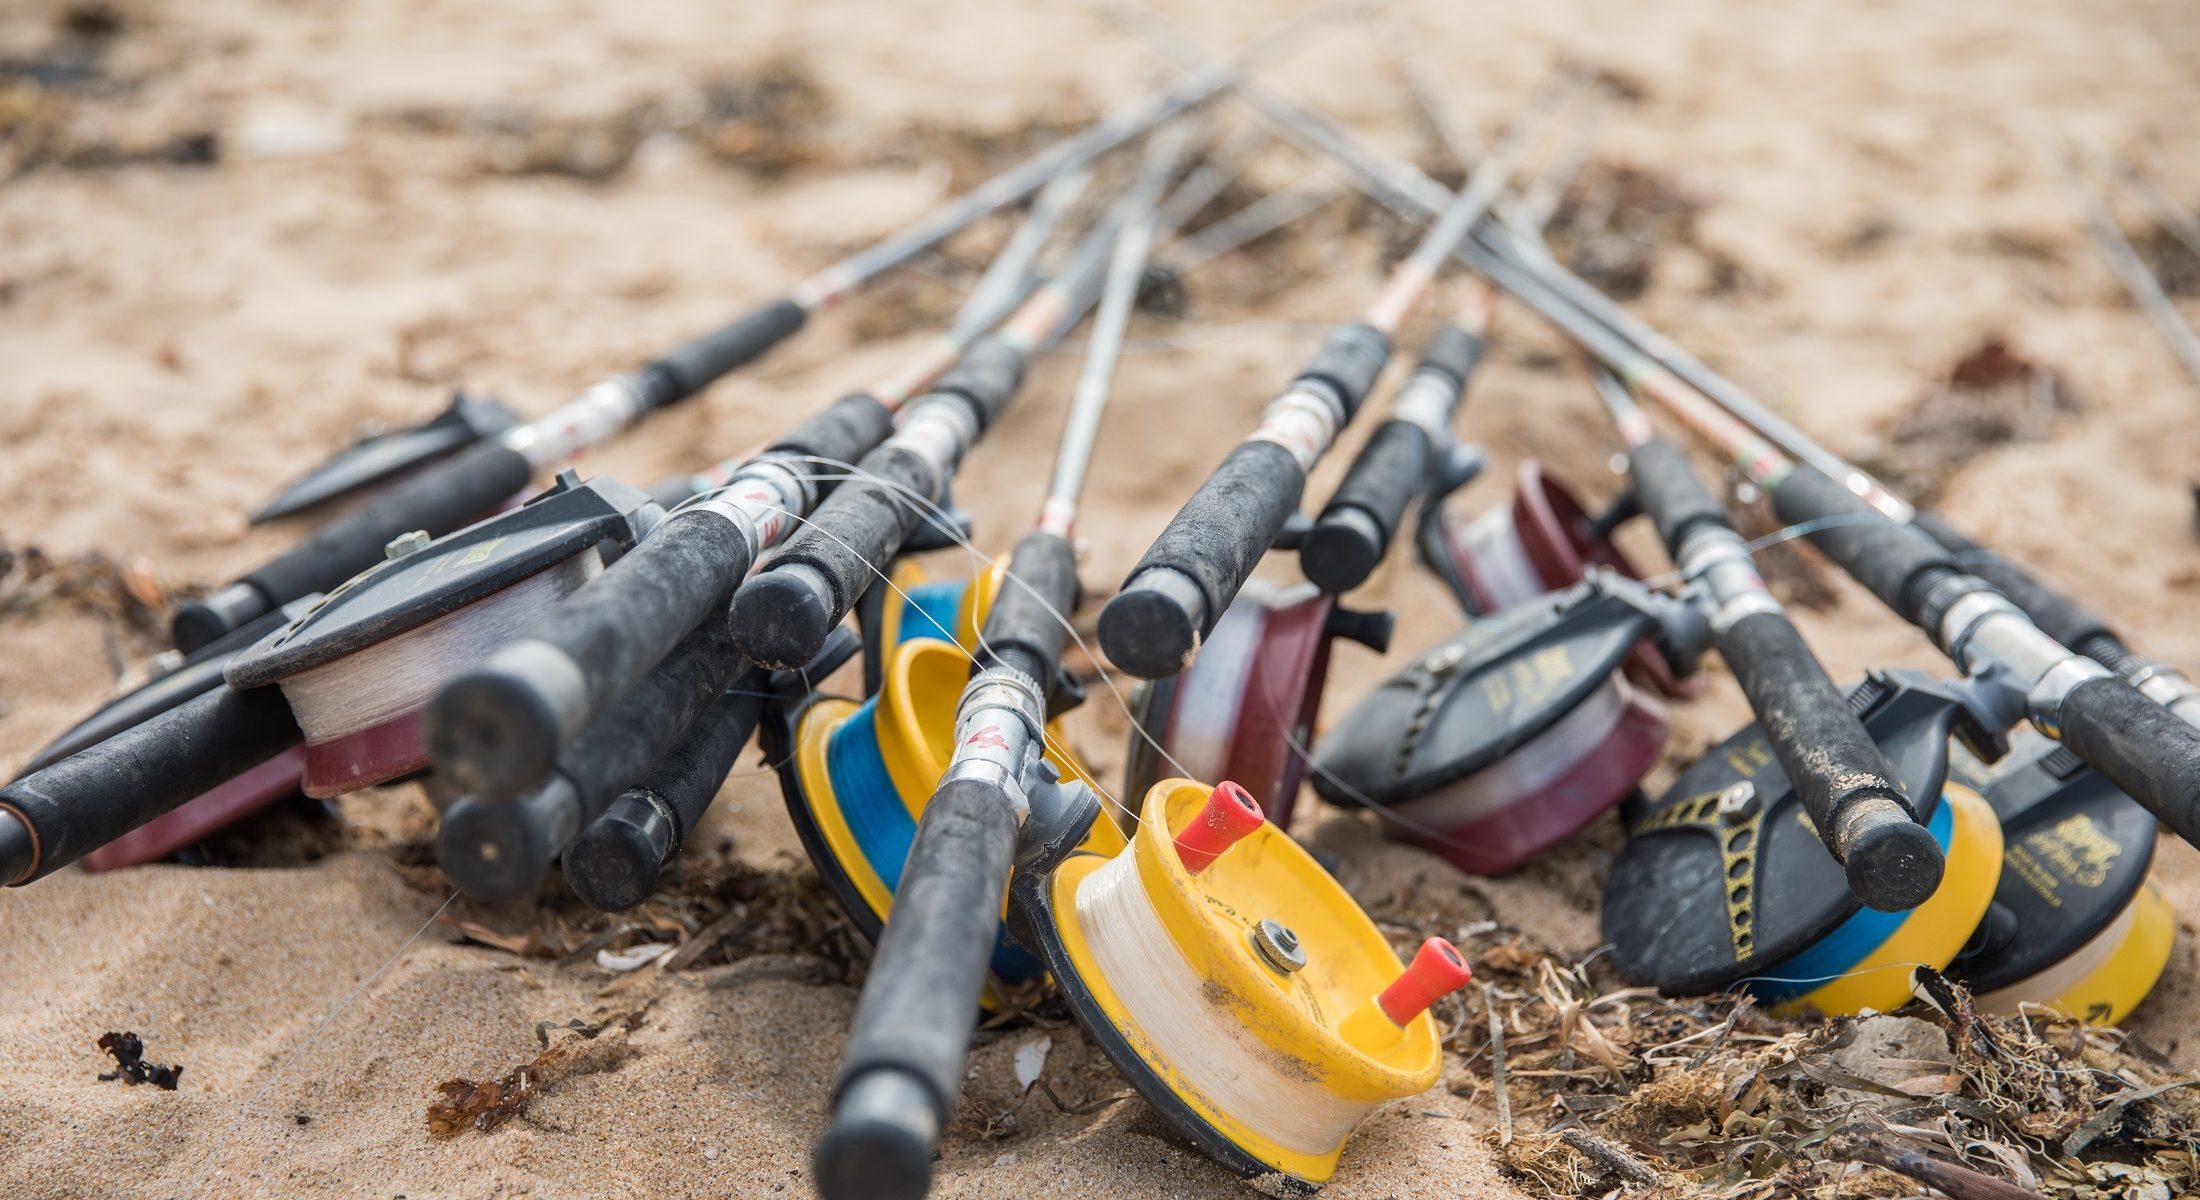 Fishing Rods Redcliffe Jetty Sand Moreton Bay Region